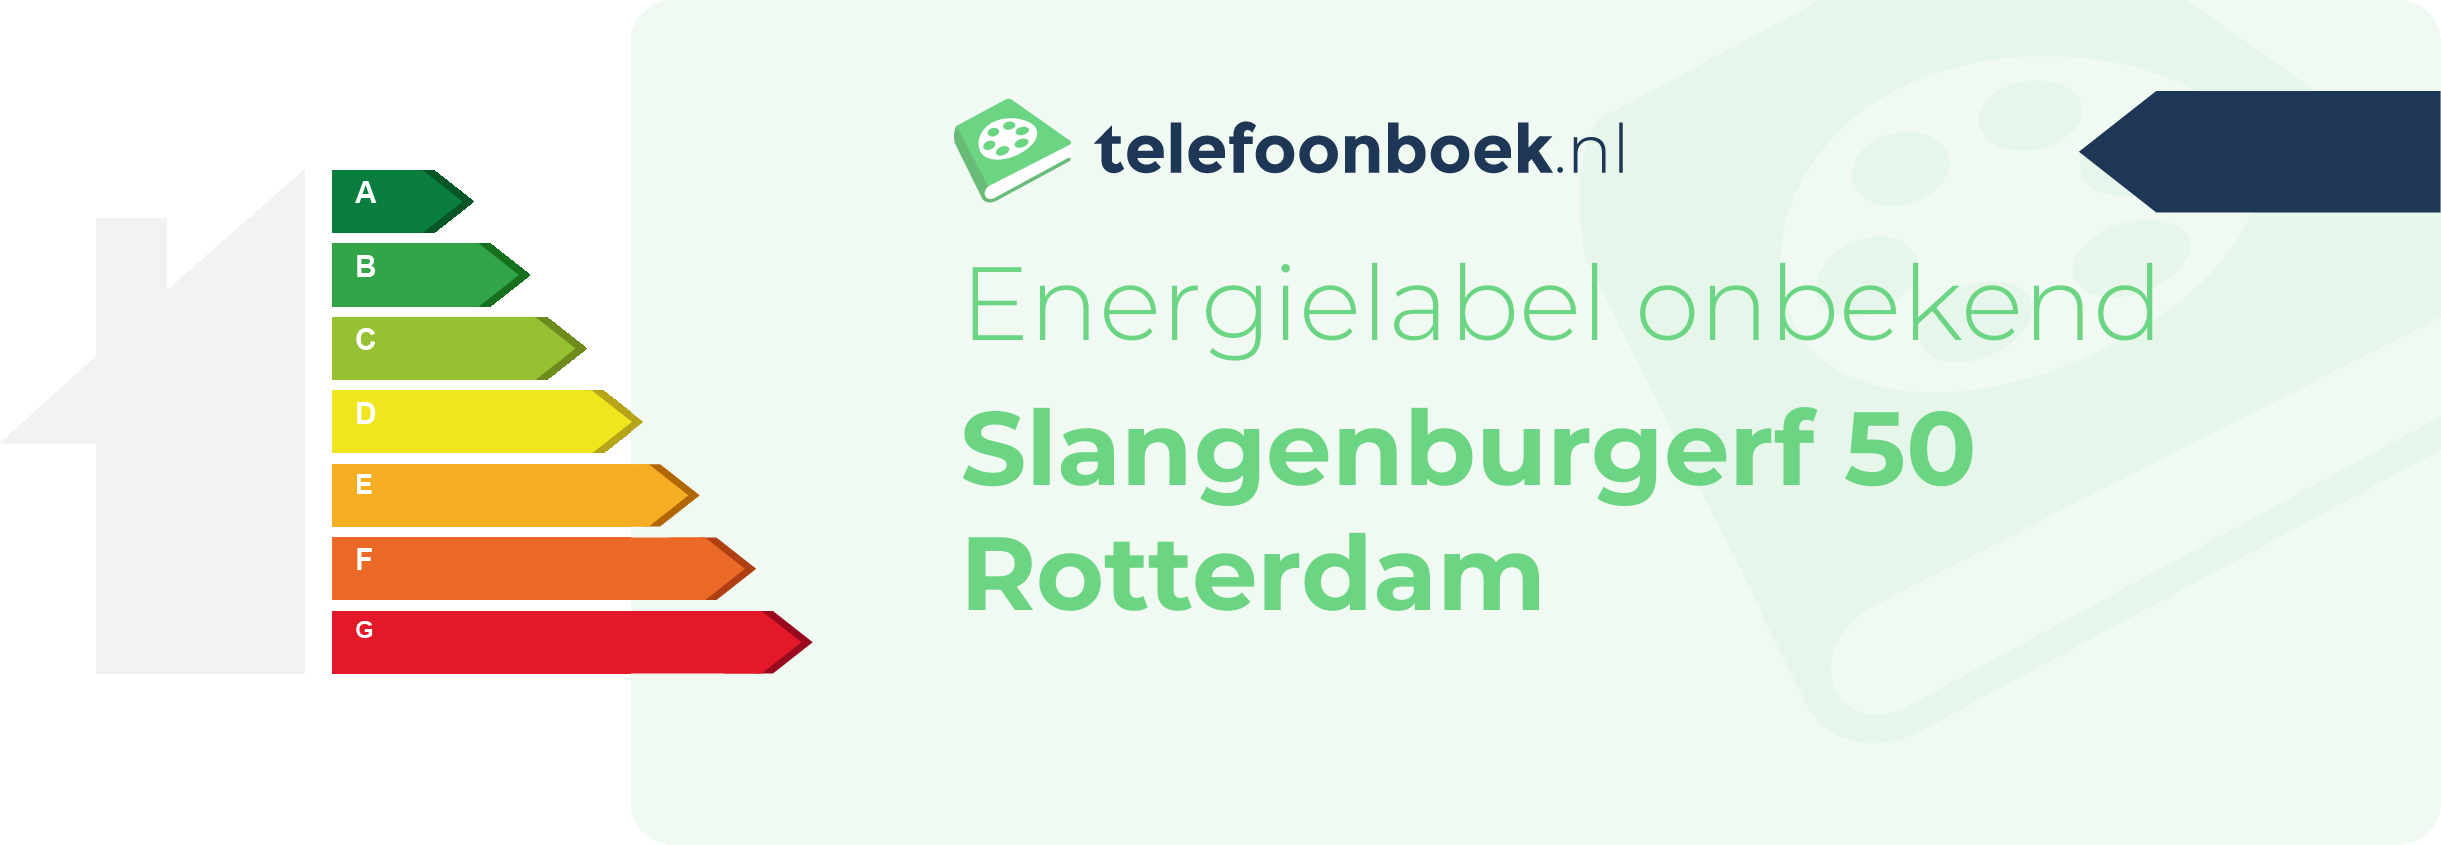 Energielabel Slangenburgerf 50 Rotterdam